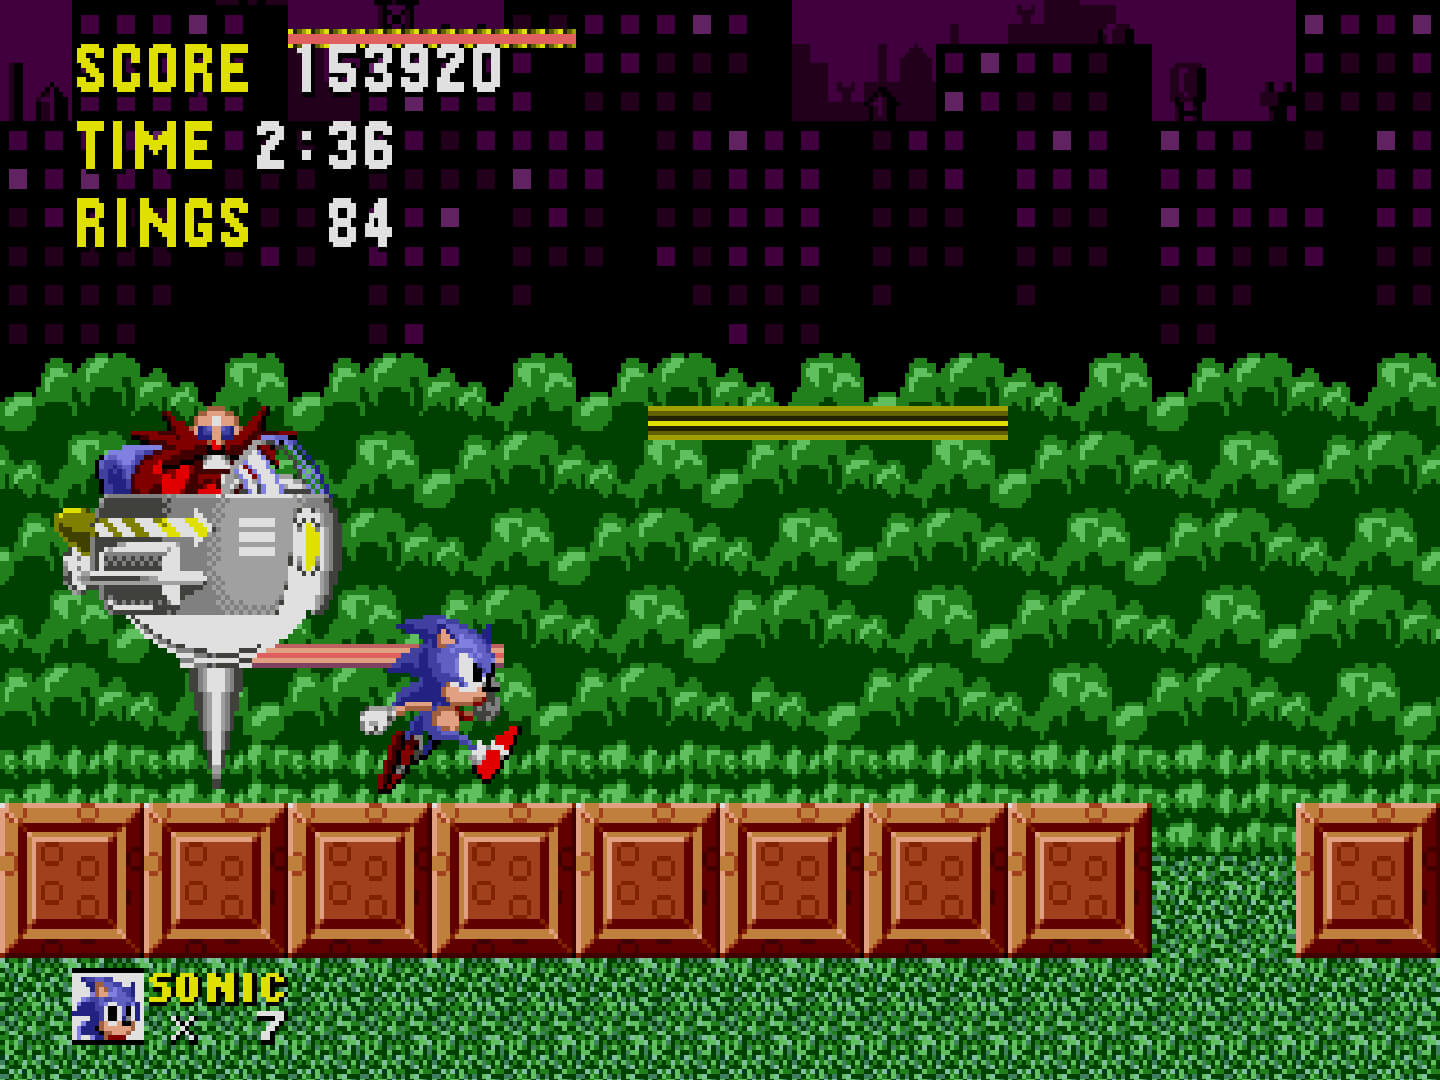 Green Hill Zone - Sonic the Hedgehog - Sega Genesis (1991) : r/nostalgia